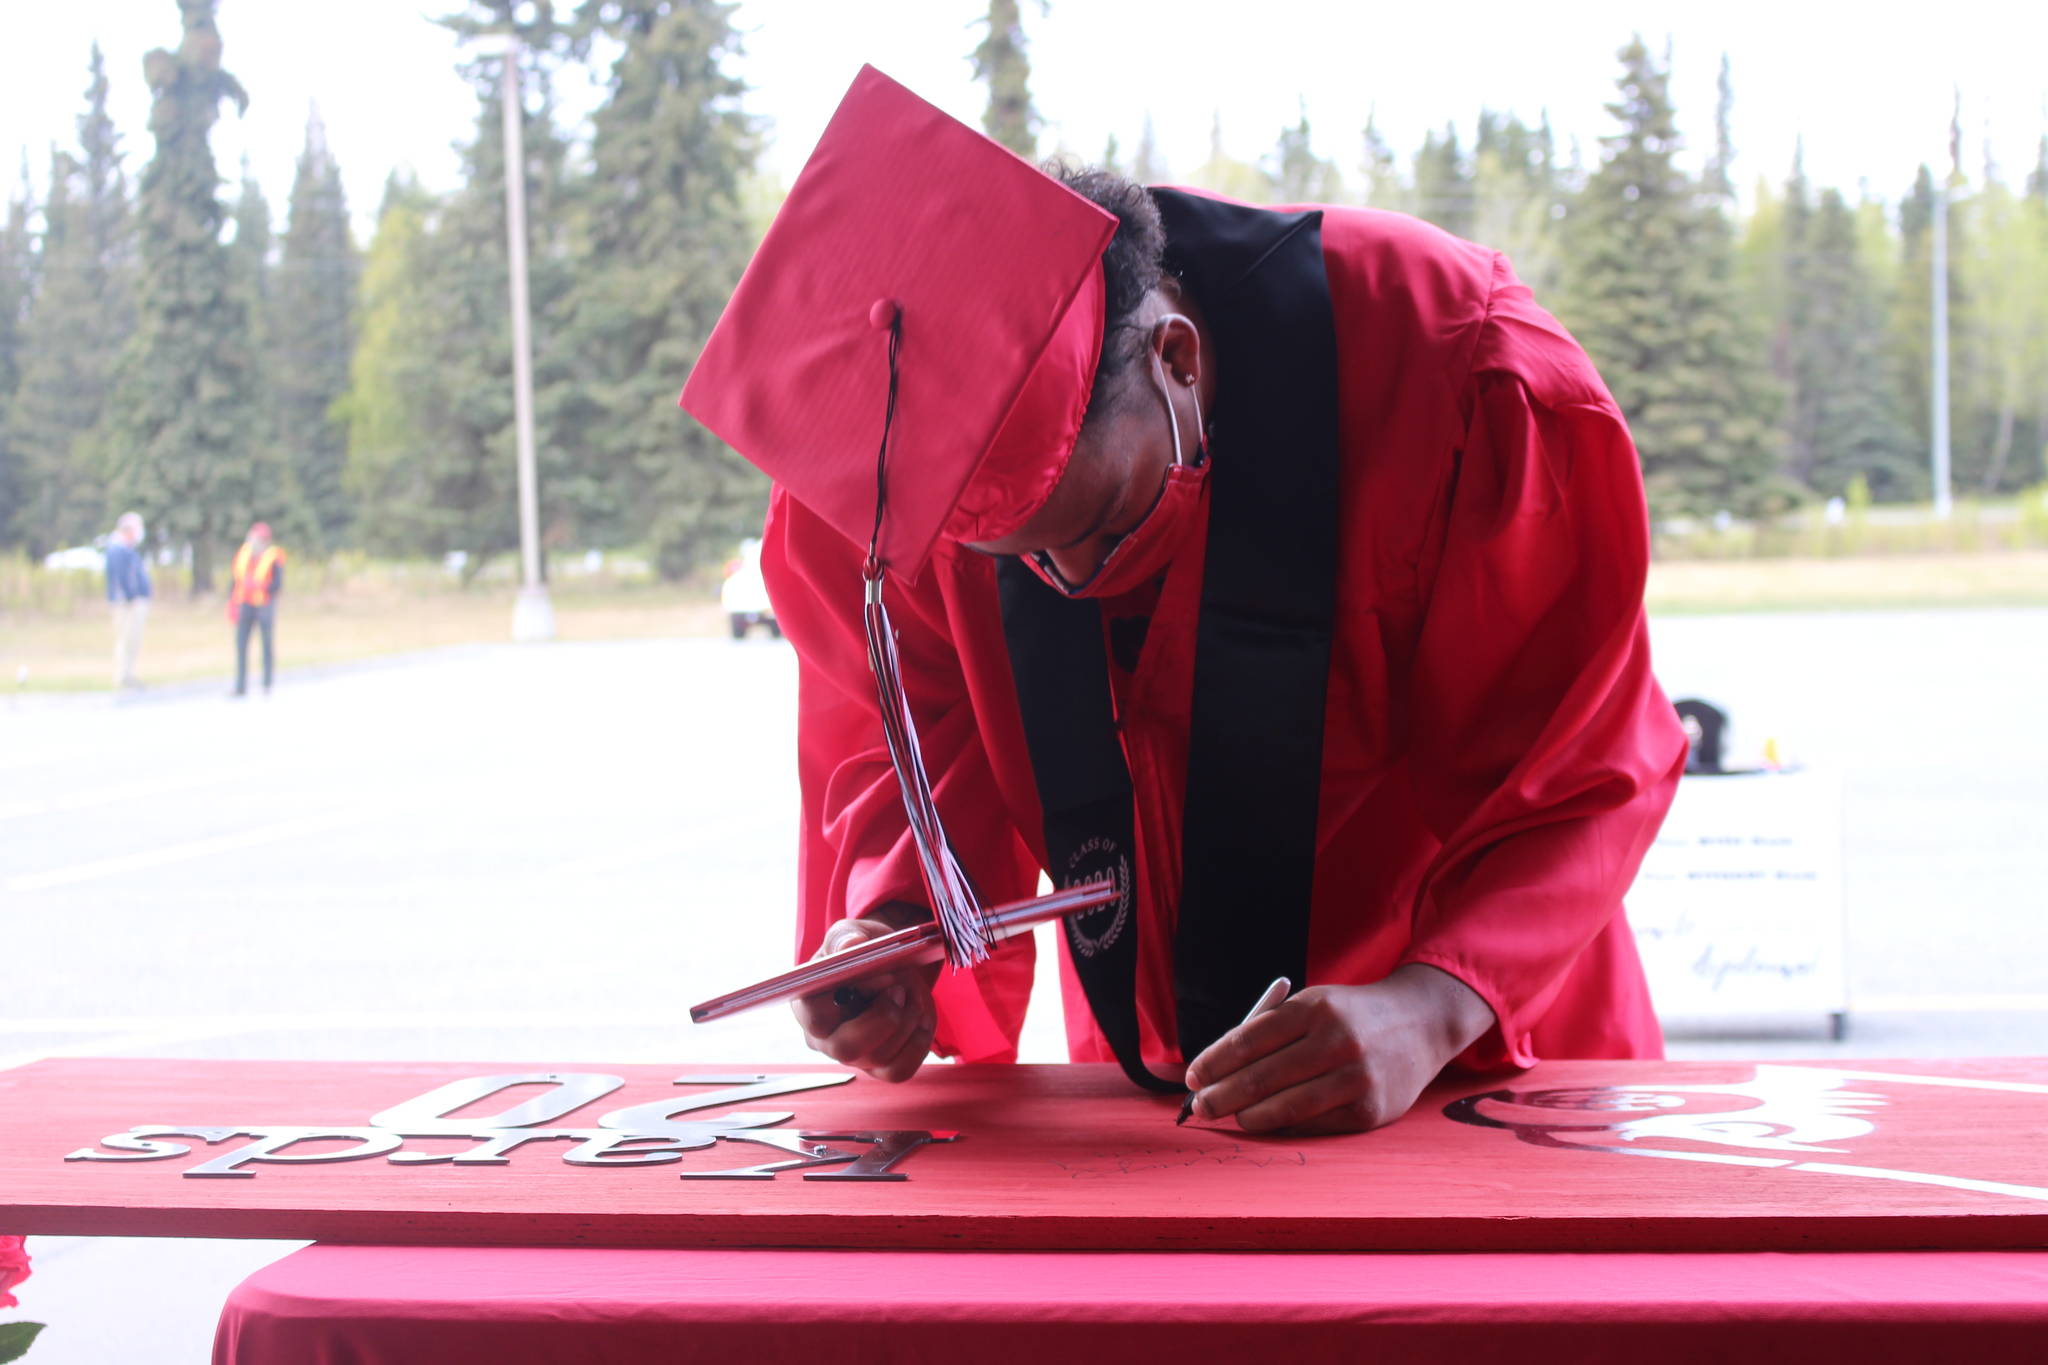 Senior Elijah Royal-Reyna receives his diploma during Kenai Central High School’s Class of 2020 Graduation Parade in Kenai, Alaska on May 20, 2020. (Photo by Brian Mazurek/Peninsula Clarion)